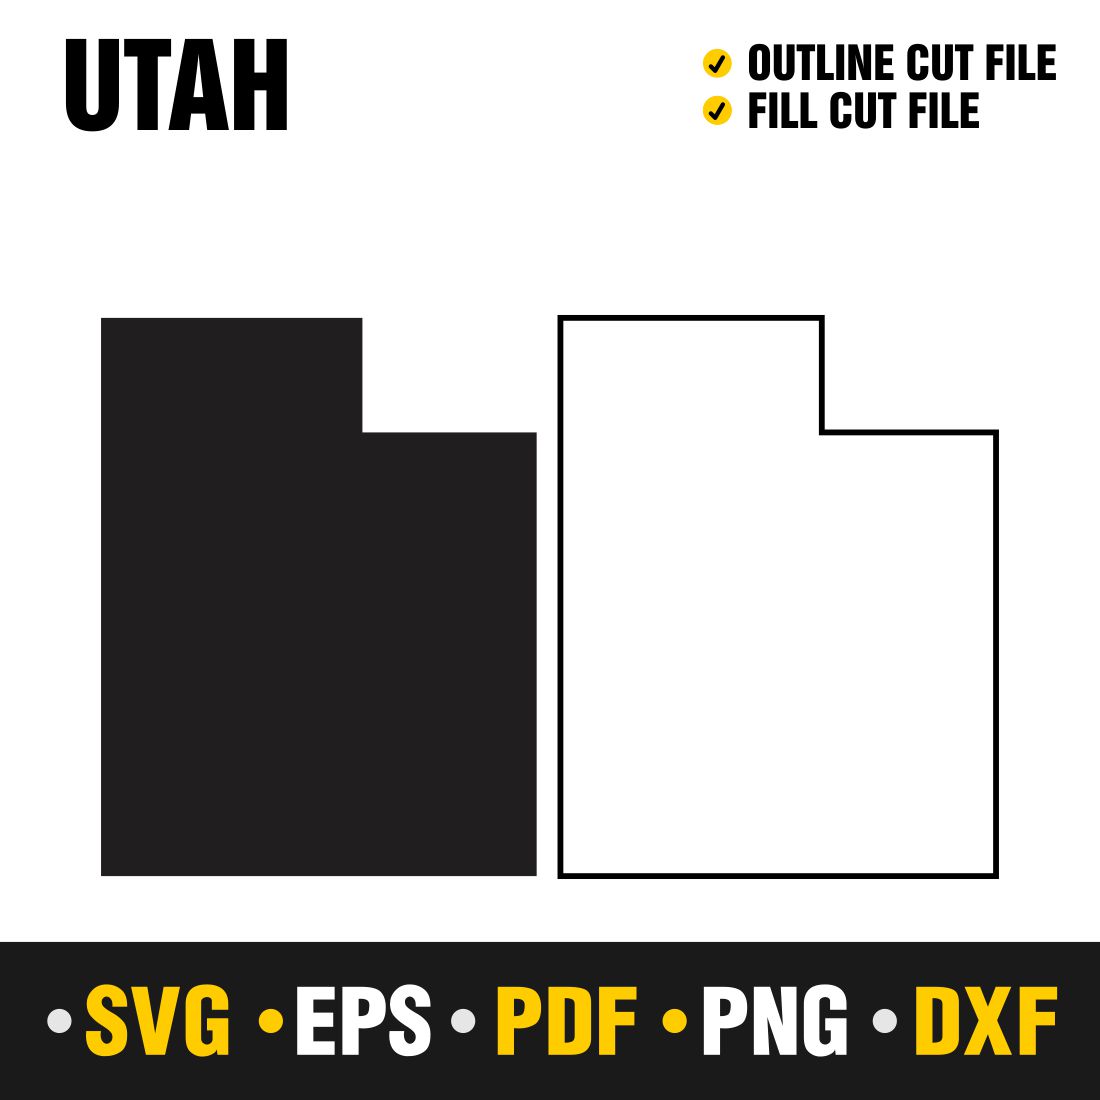 Utah SVG, PNG, PDF, EPS & DXF cover image.